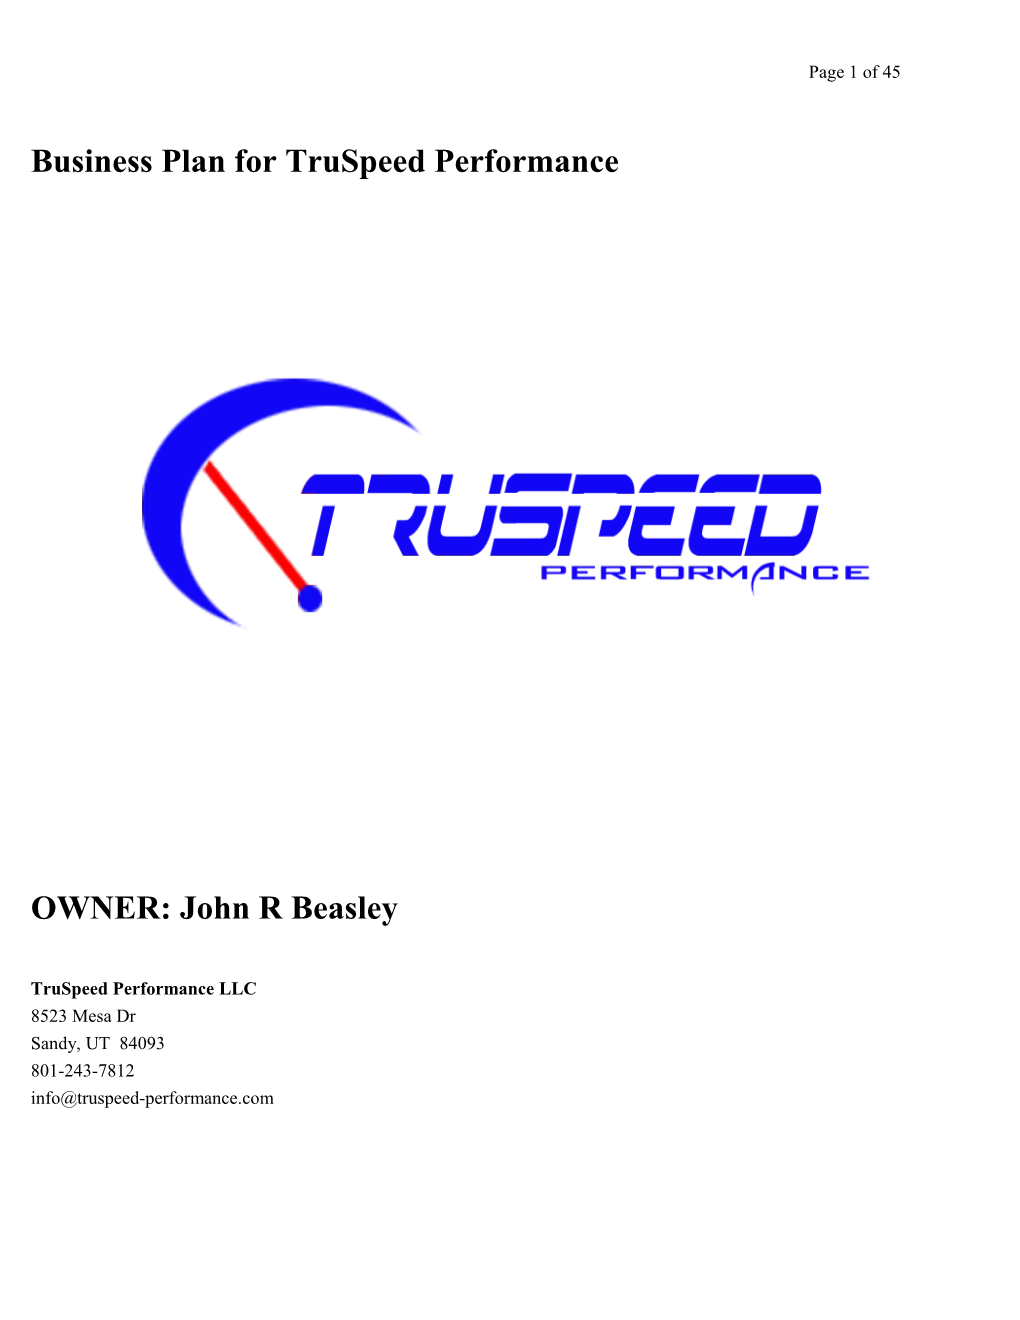 Business Plan for Truspeed Performance